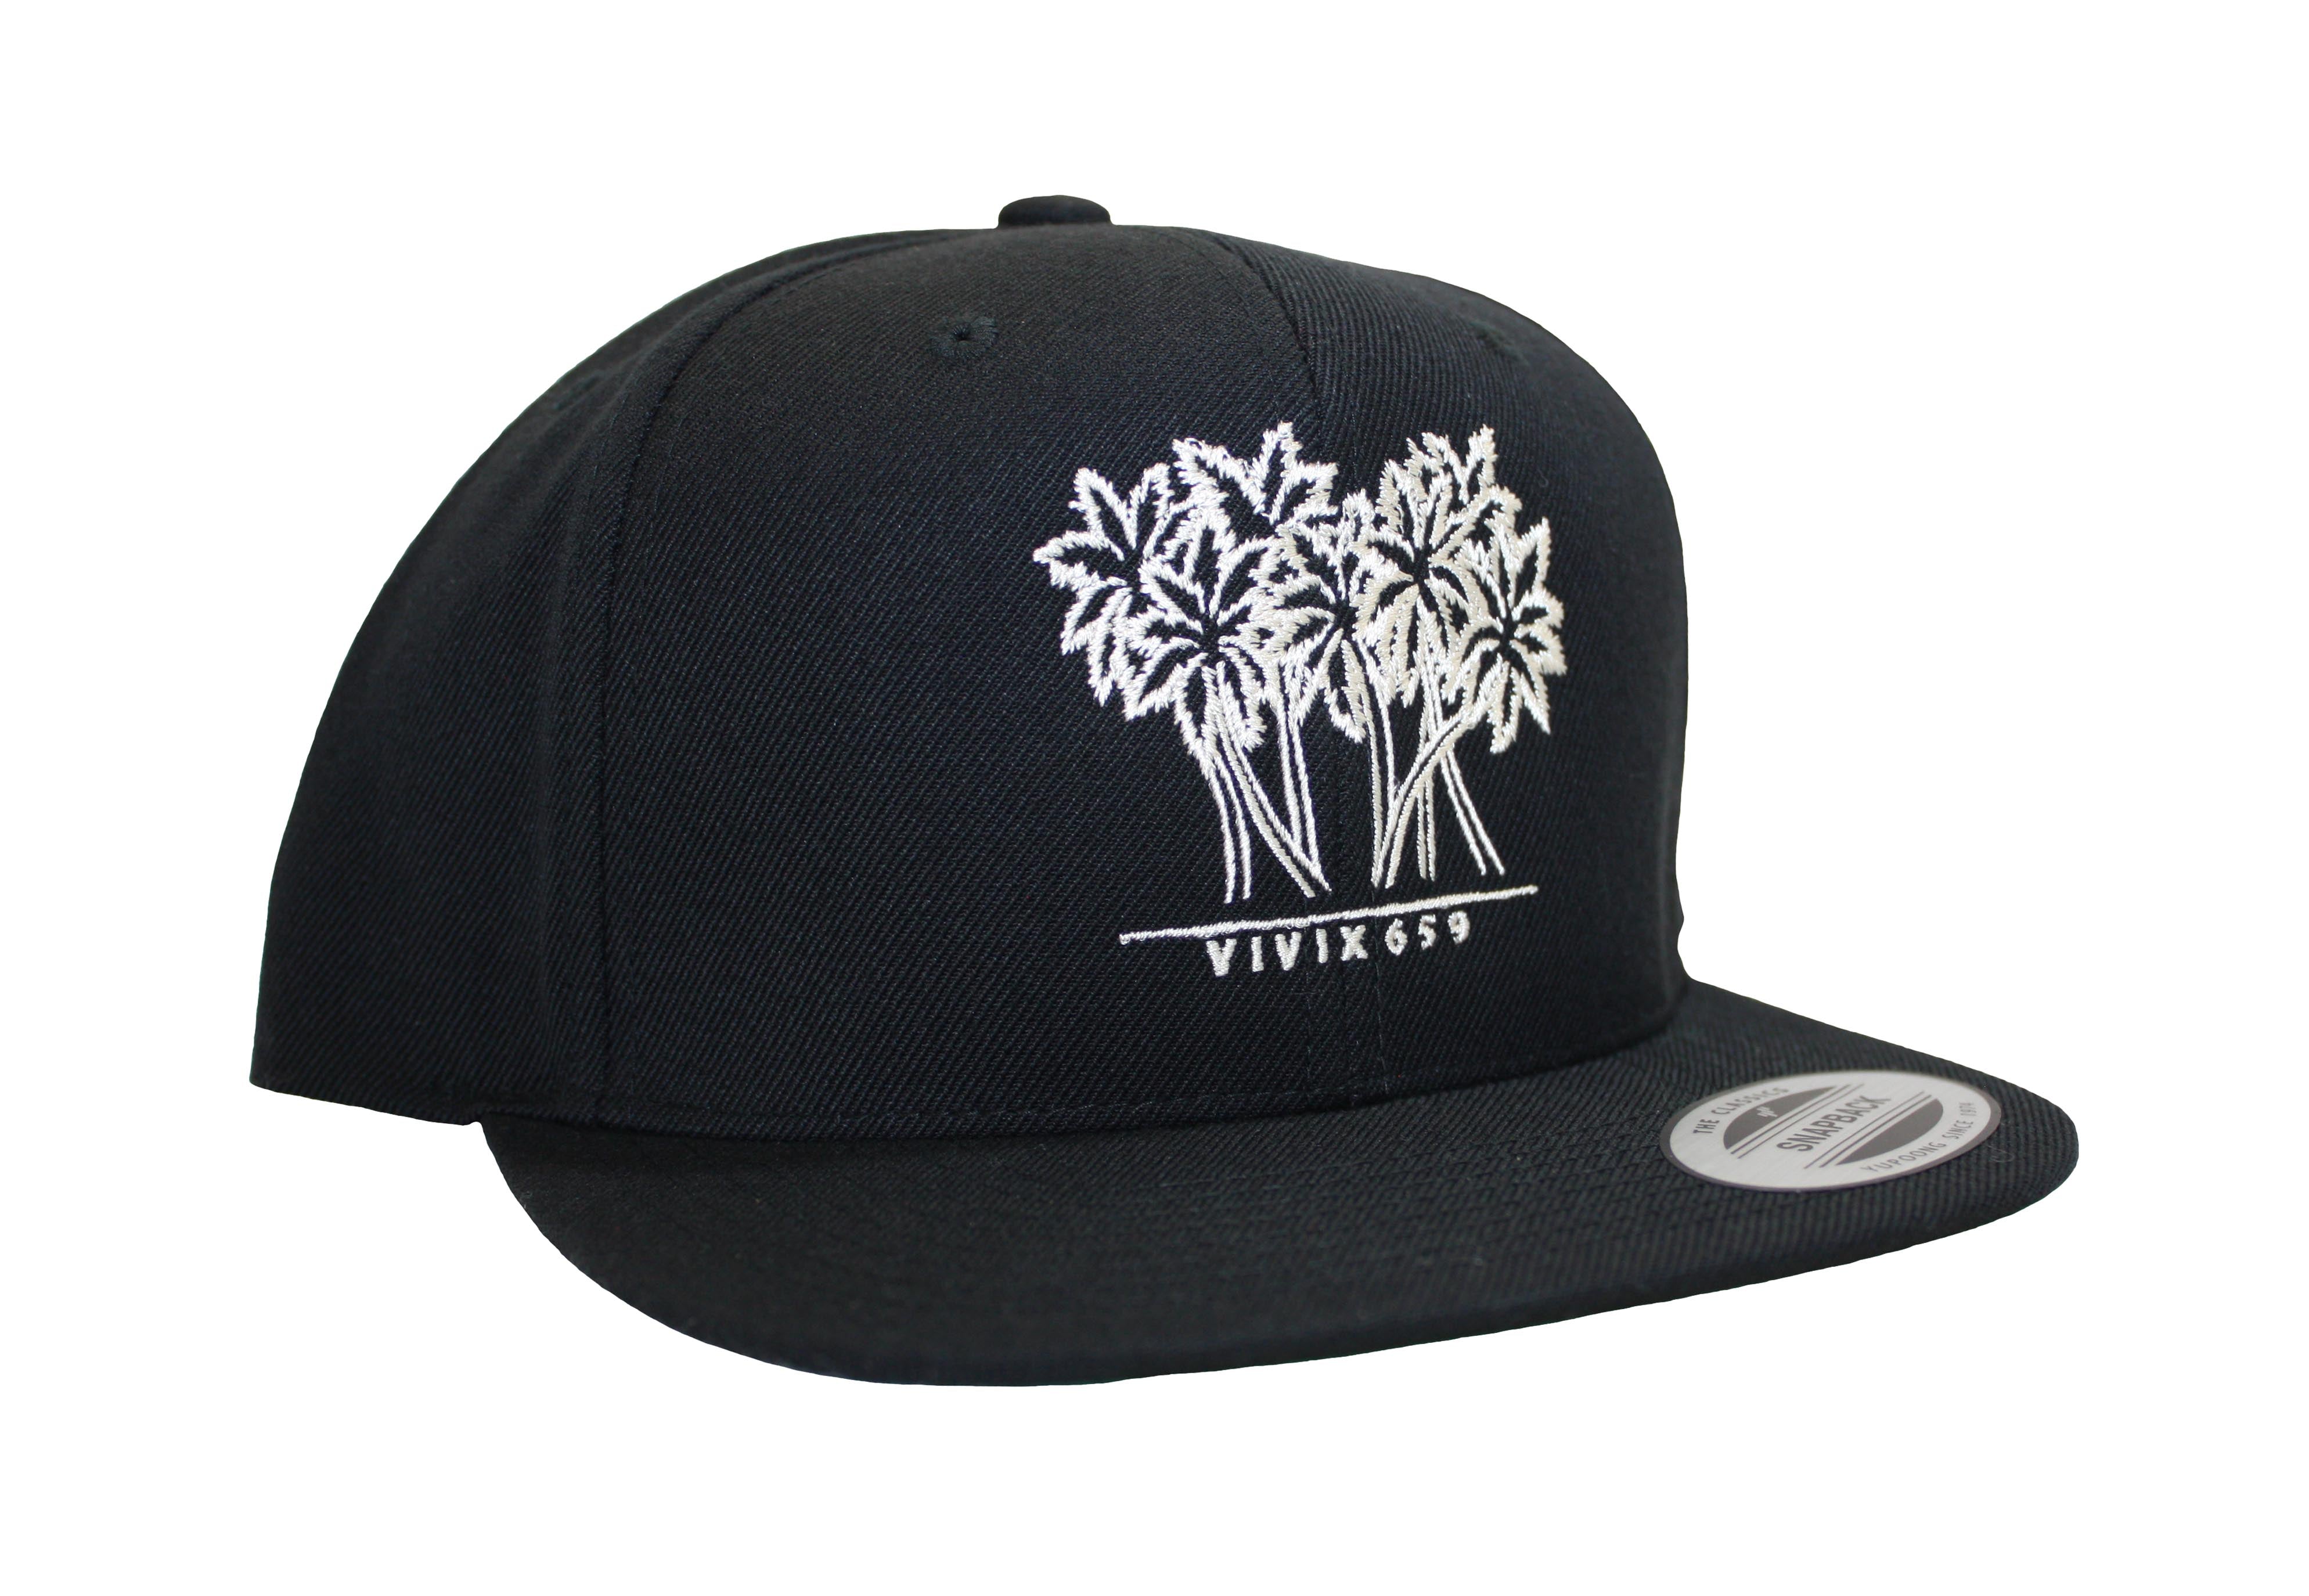 Vivix 659 Brand: Unisex Graphic California Bear Embroidered Mesh Hat